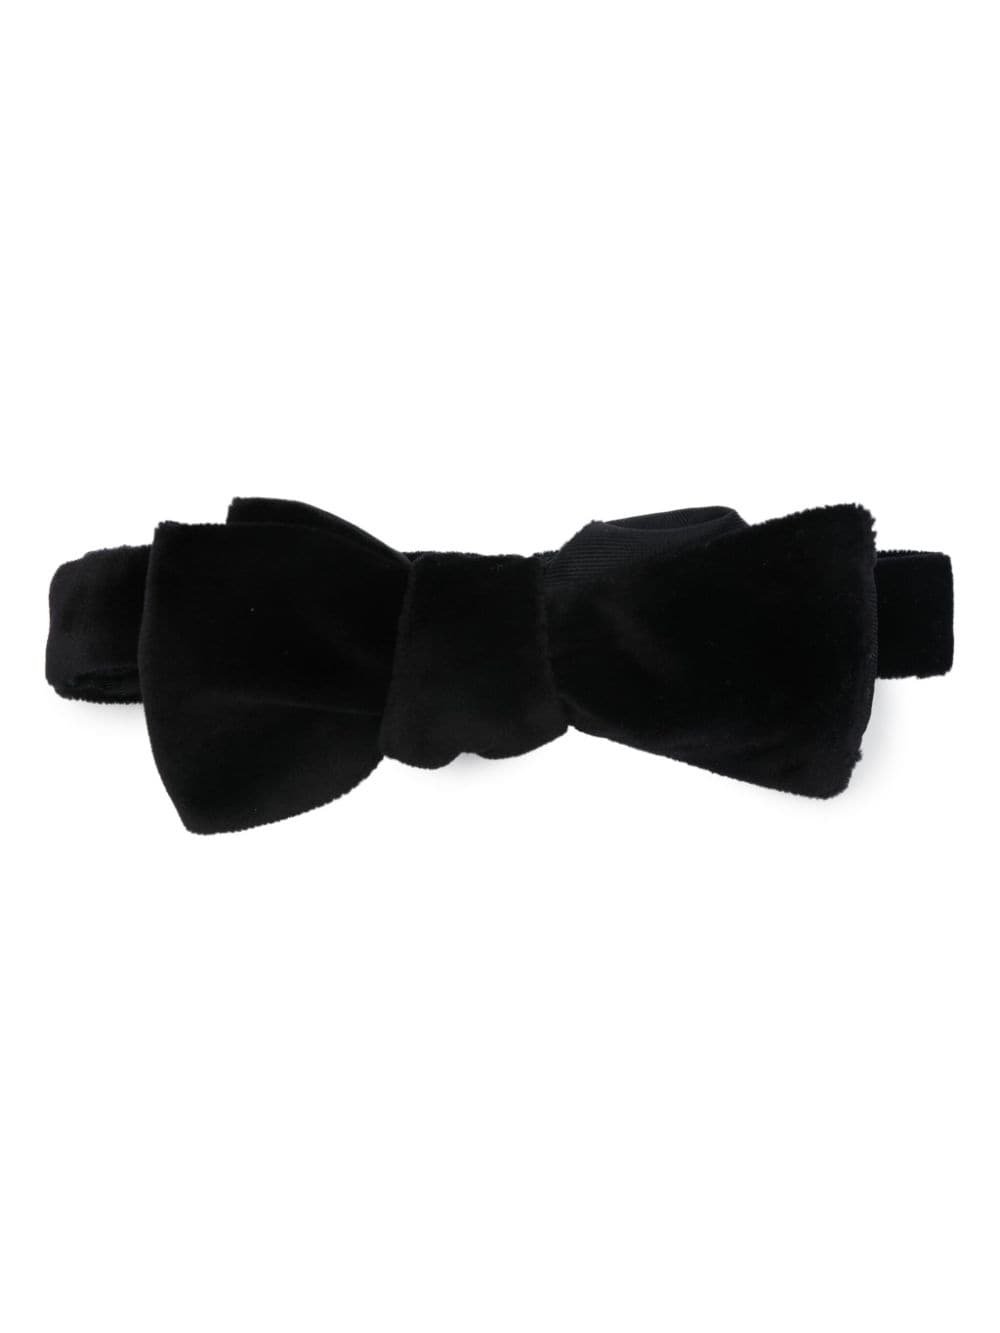 Polo Ralph Lauren adjustable velvet bow tie - Black von Polo Ralph Lauren